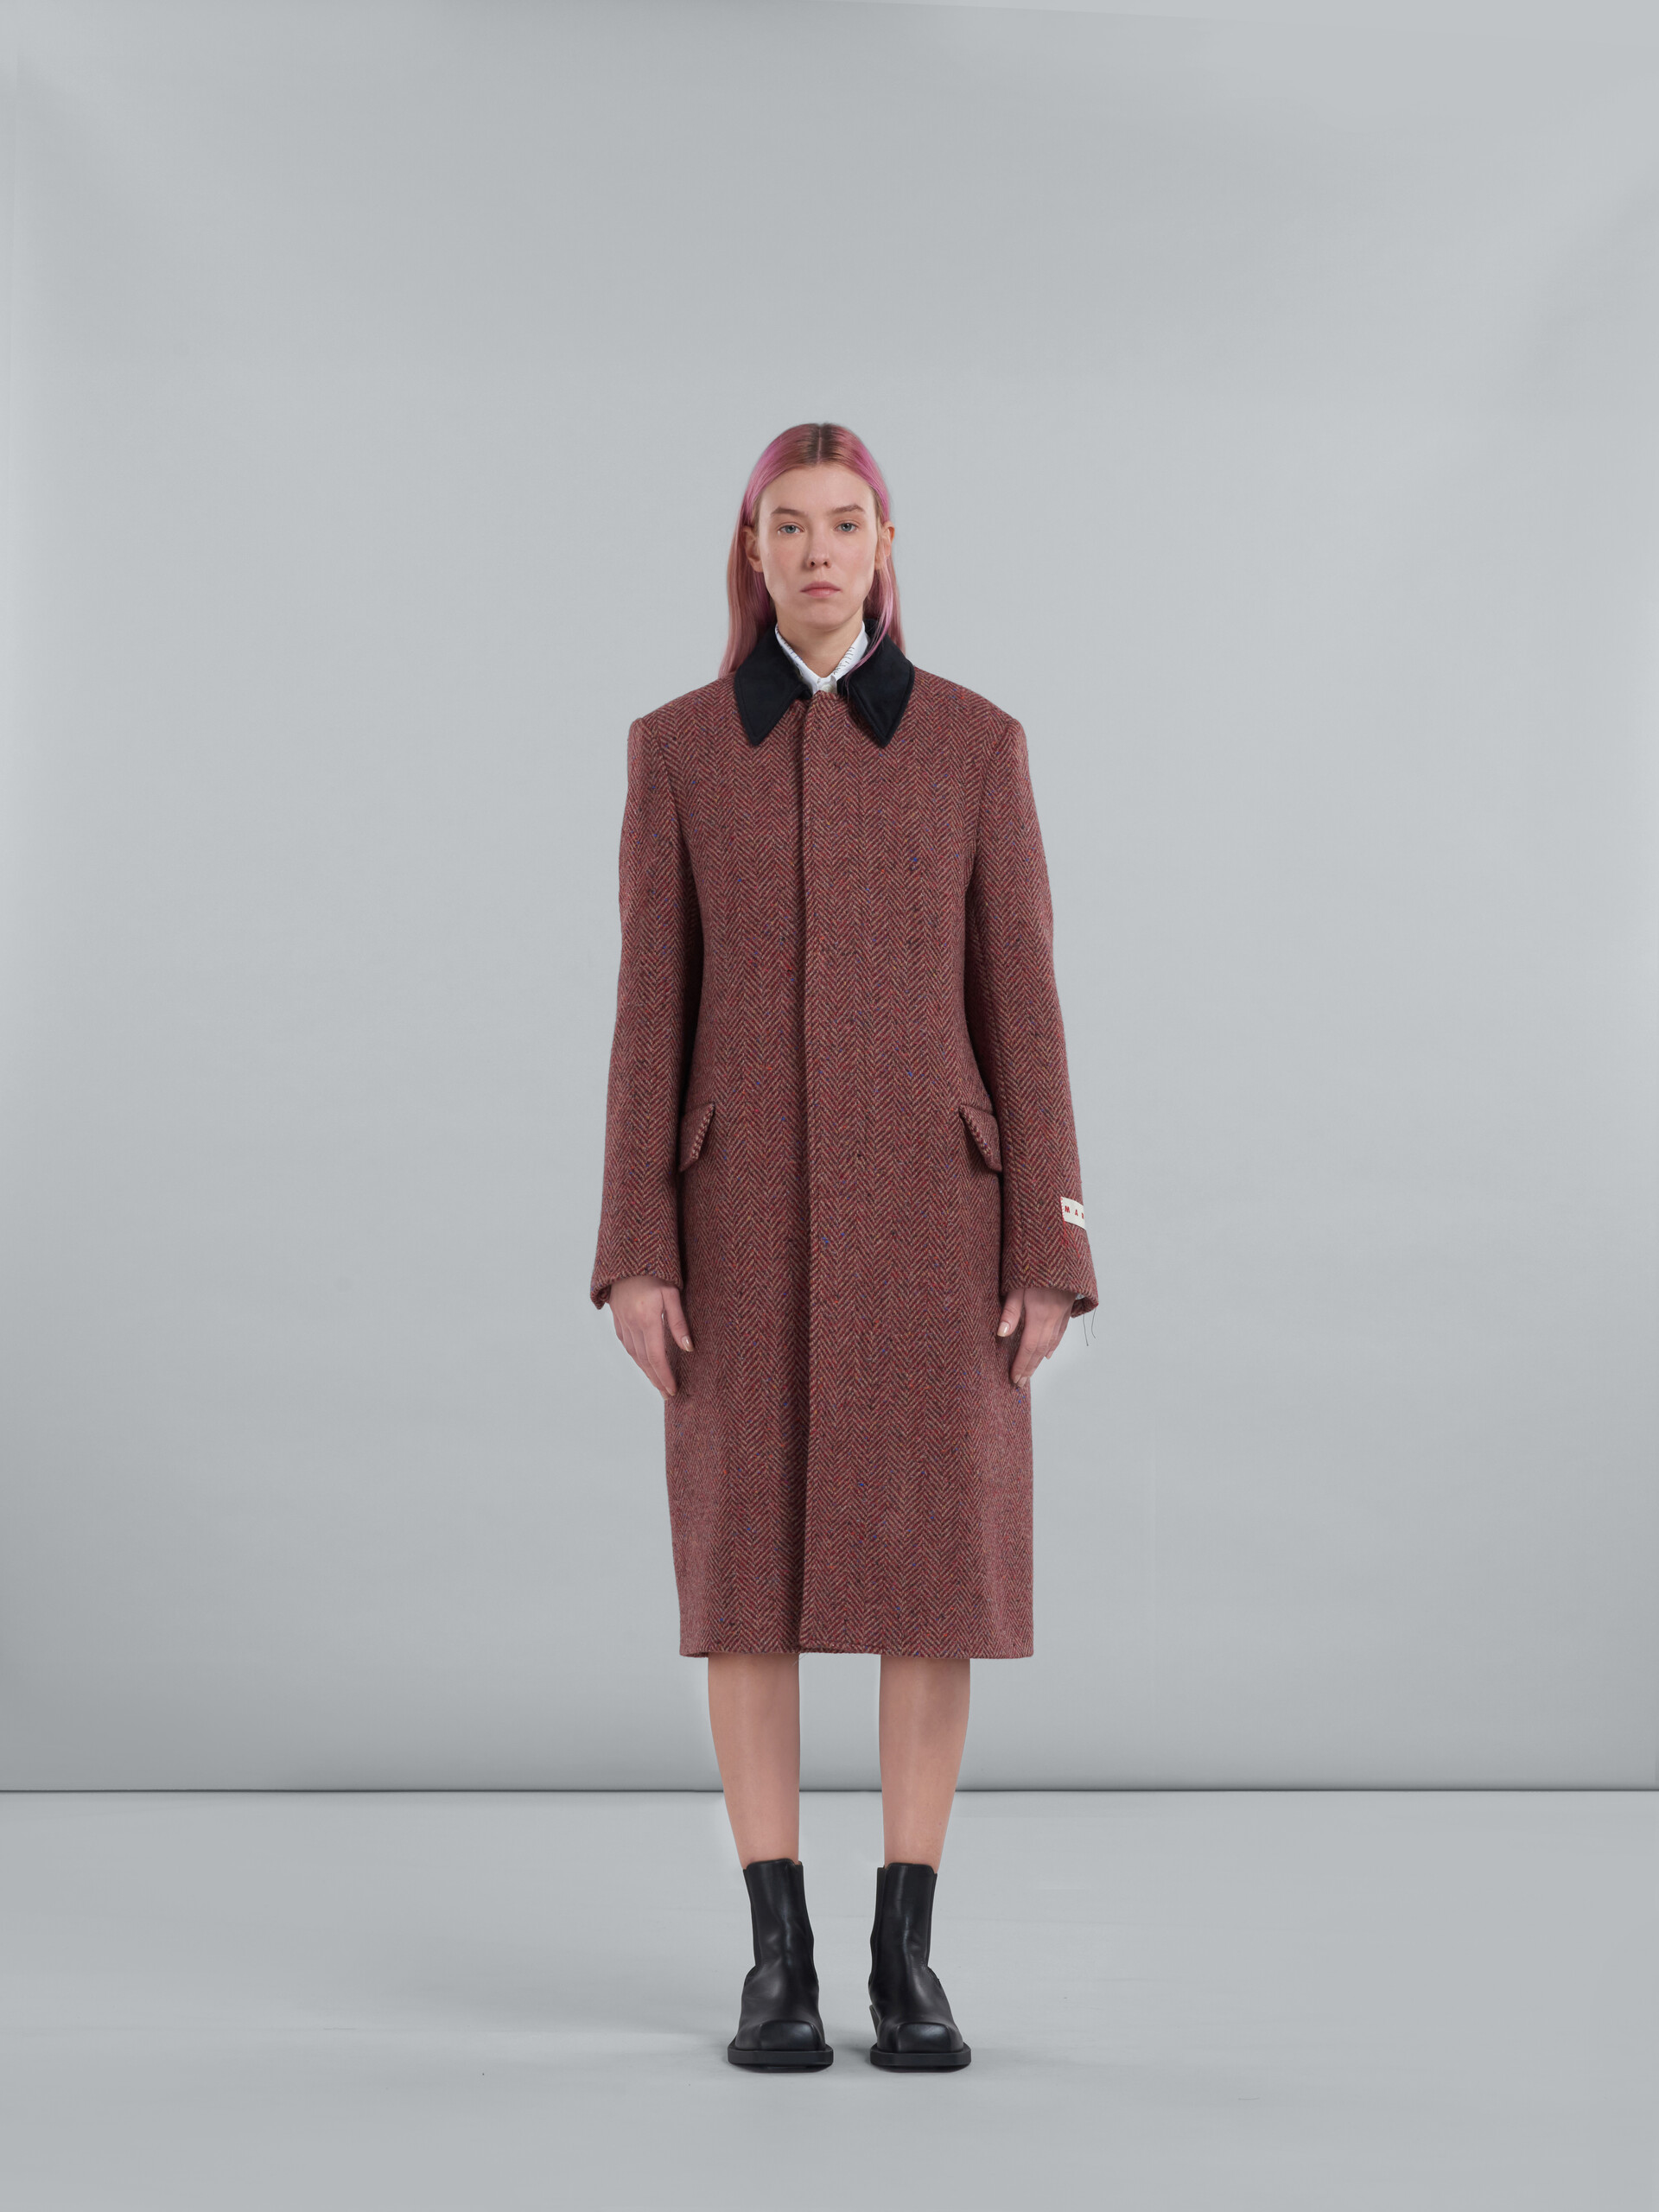 Burgundy chevron wool coat with velvet collar - Coat - Image 2